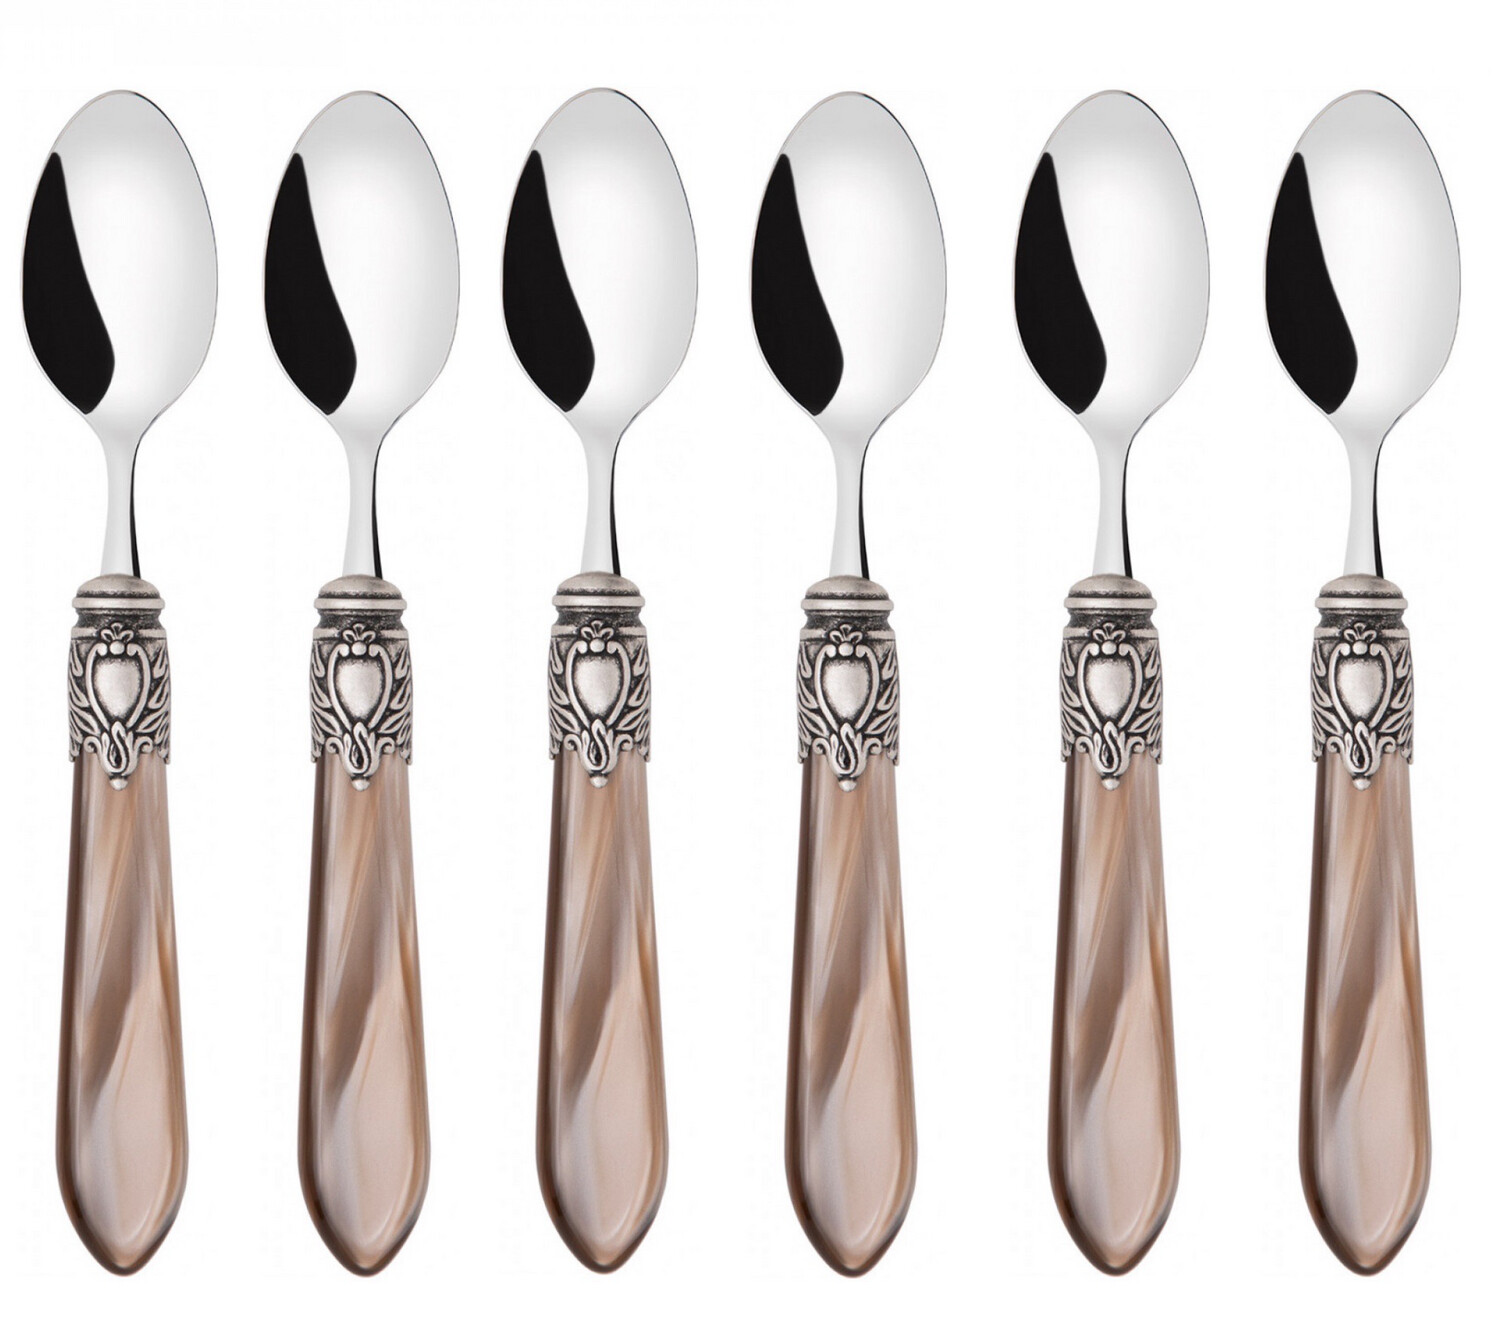 Oxford Antique Mocha Spoons Set taupe